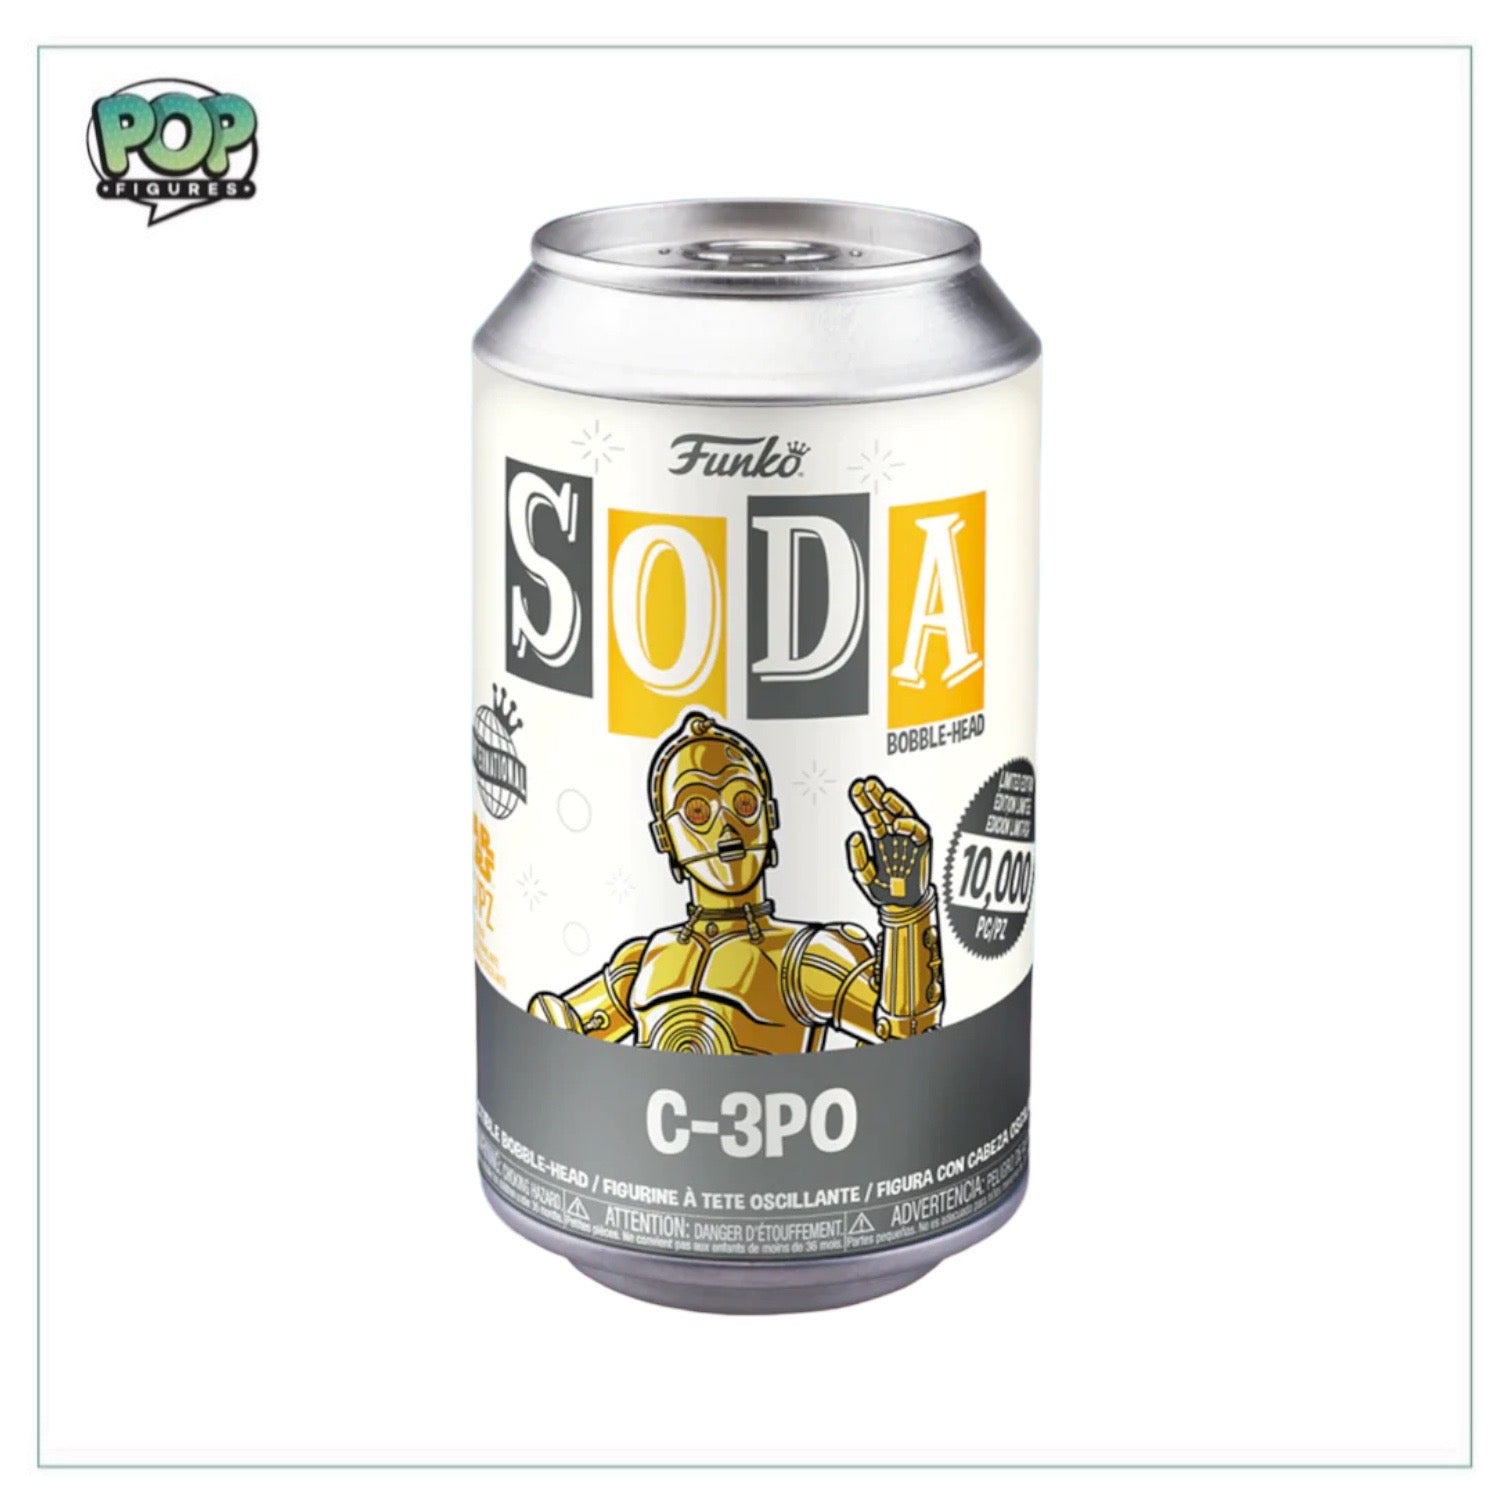 C-3PO Funko Soda Vinyl Figure! - Star Wars - International LE10000 Pcs - Chance of Chase